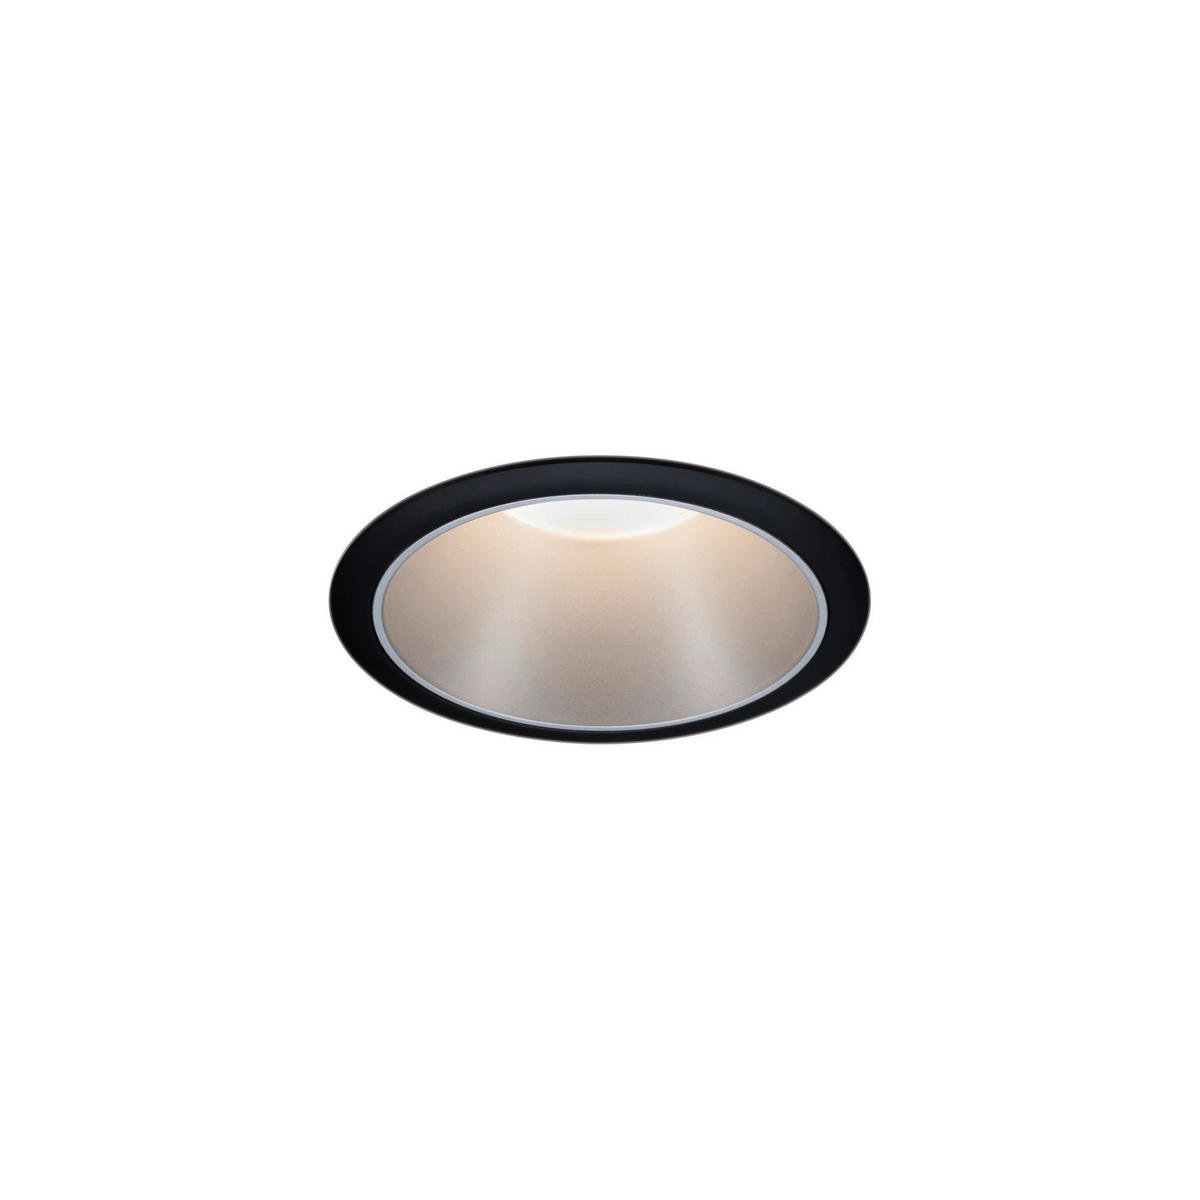 LED-SPOTKOPF 8,8 cm  - Silberfarben/Schwarz, Design, Kunststoff/Metall (8,8cm) - Paulmann